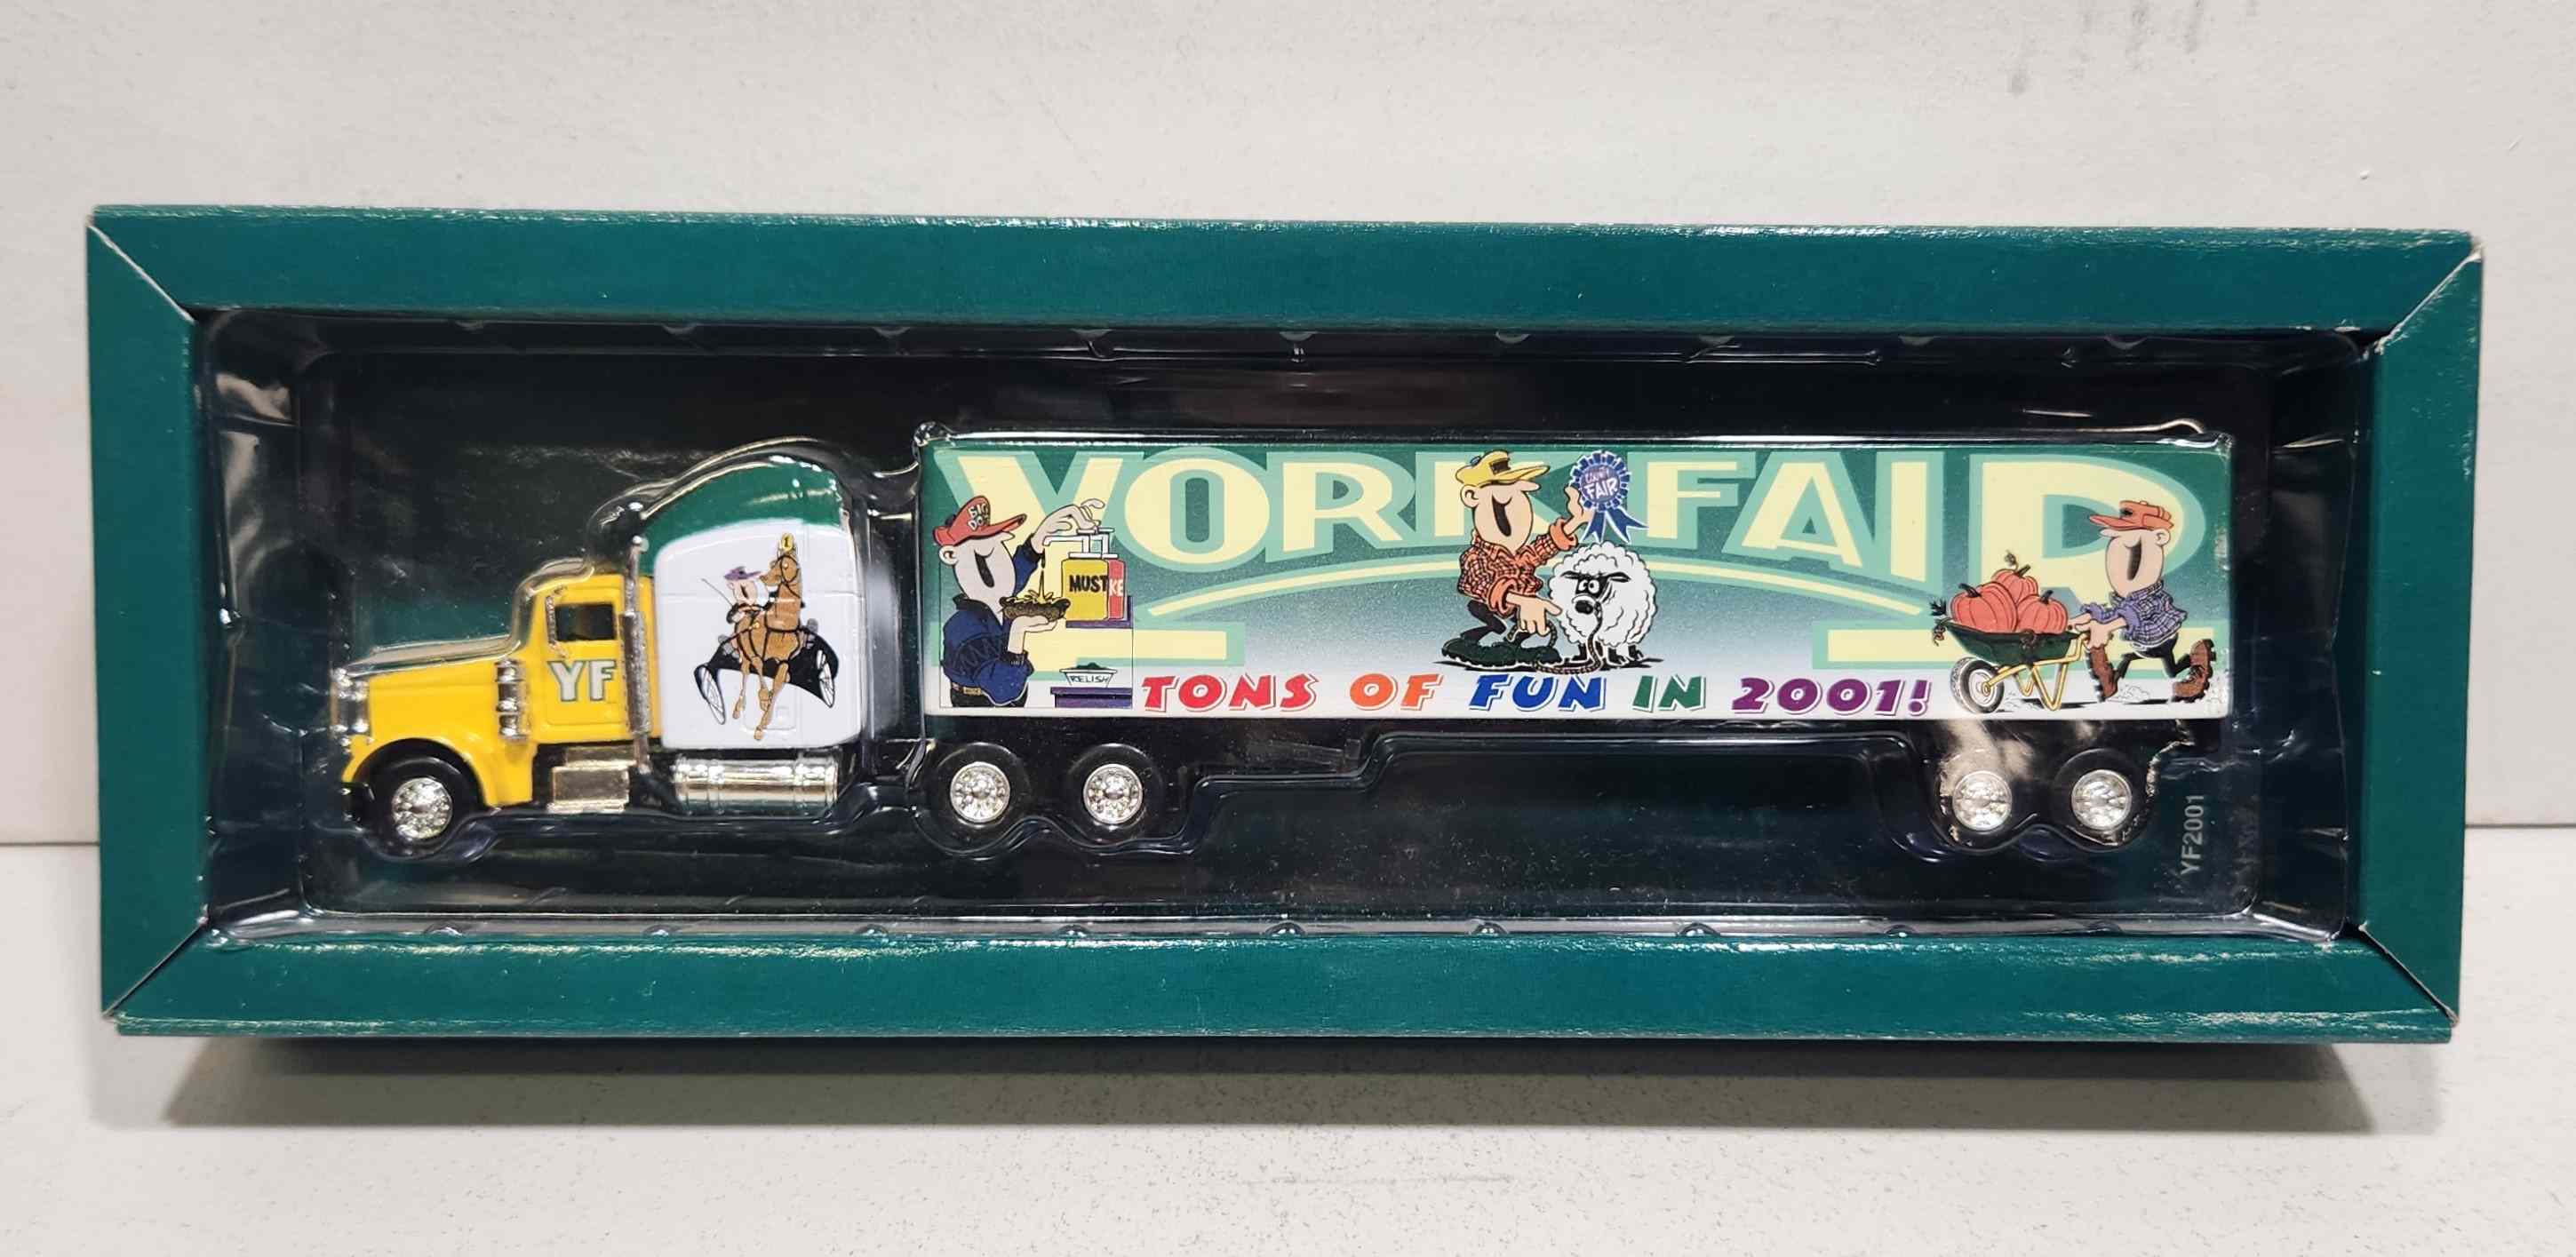 2001 York Fair 1/80th "Tons of Fun" Transporter